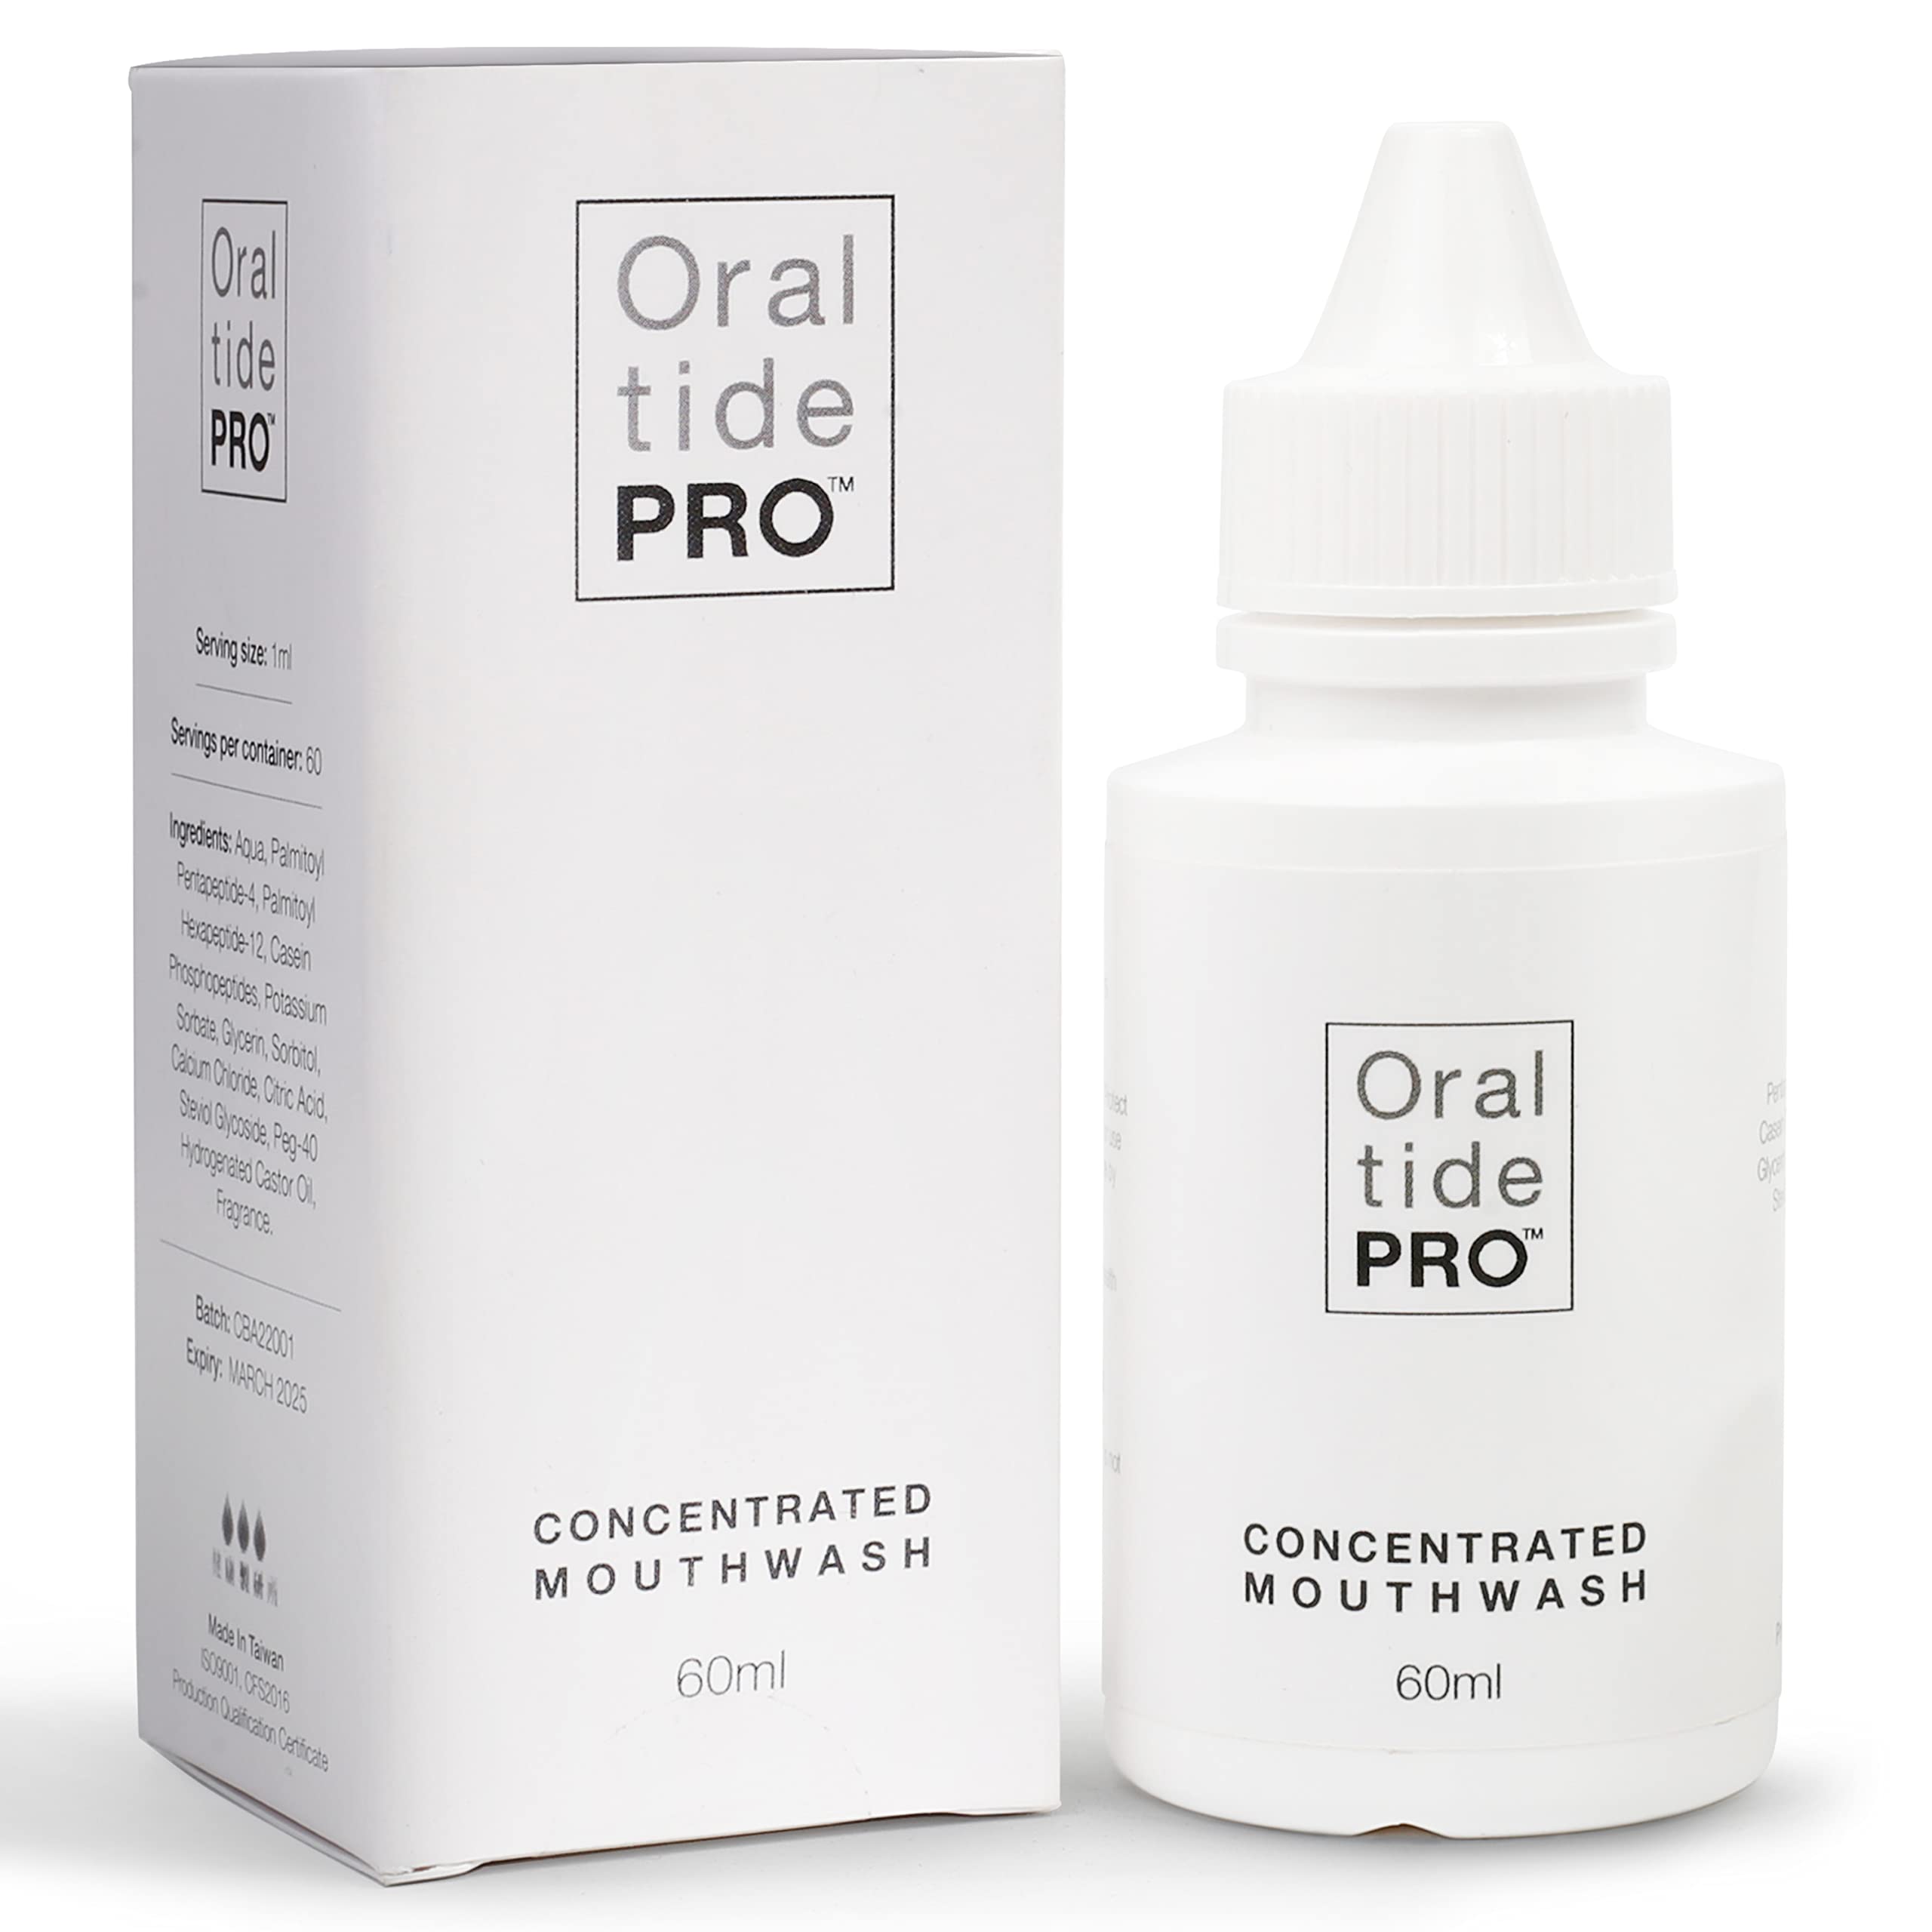 Oraltide Pro Peptide Mouthwash - 2 Ounce